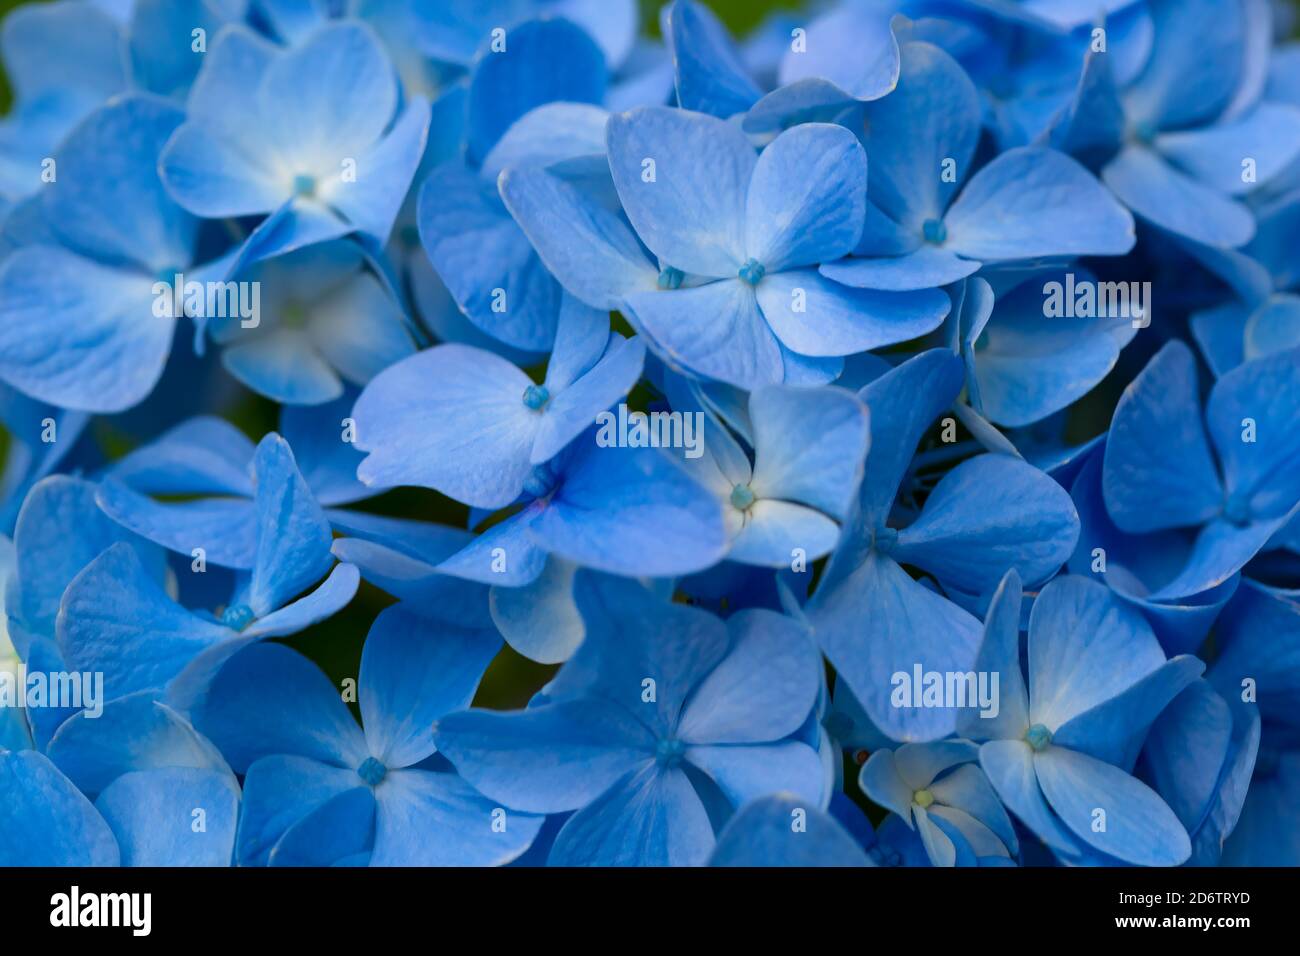 Hydrangea macrophylla, mophead hydrangea with blue flowers Stock Photo